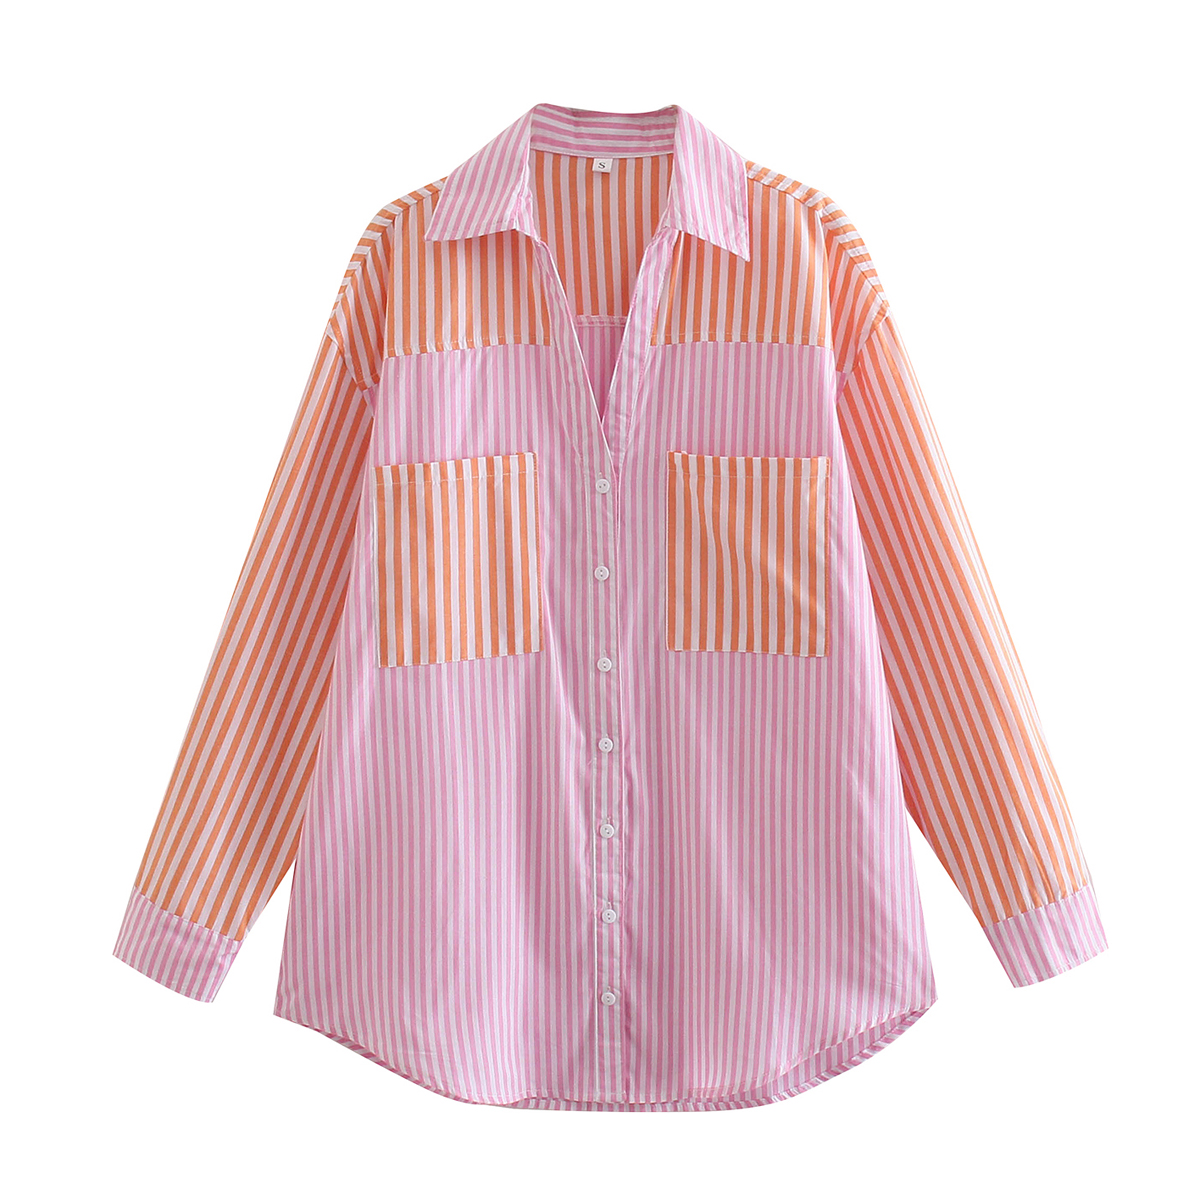 Mixed Color Stripe Long Sleeve Shirt - Blouses & Shirts - Uniqistic.com